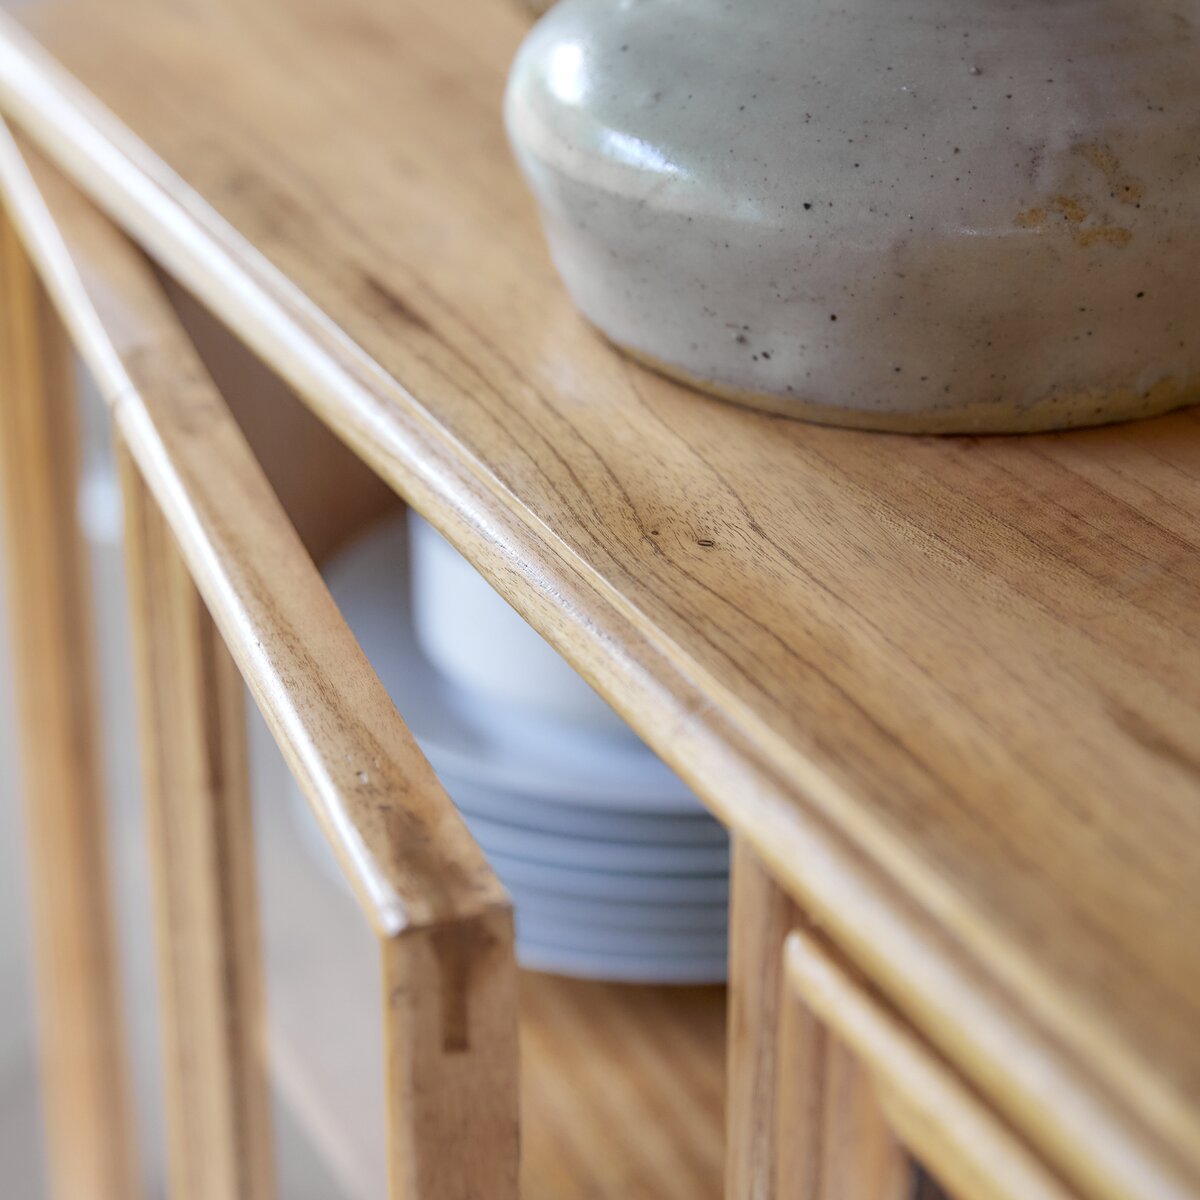 Hardwood Side Table – With Shelf & 1 Drawer – AUSTRALIAN MADE 100% Organic